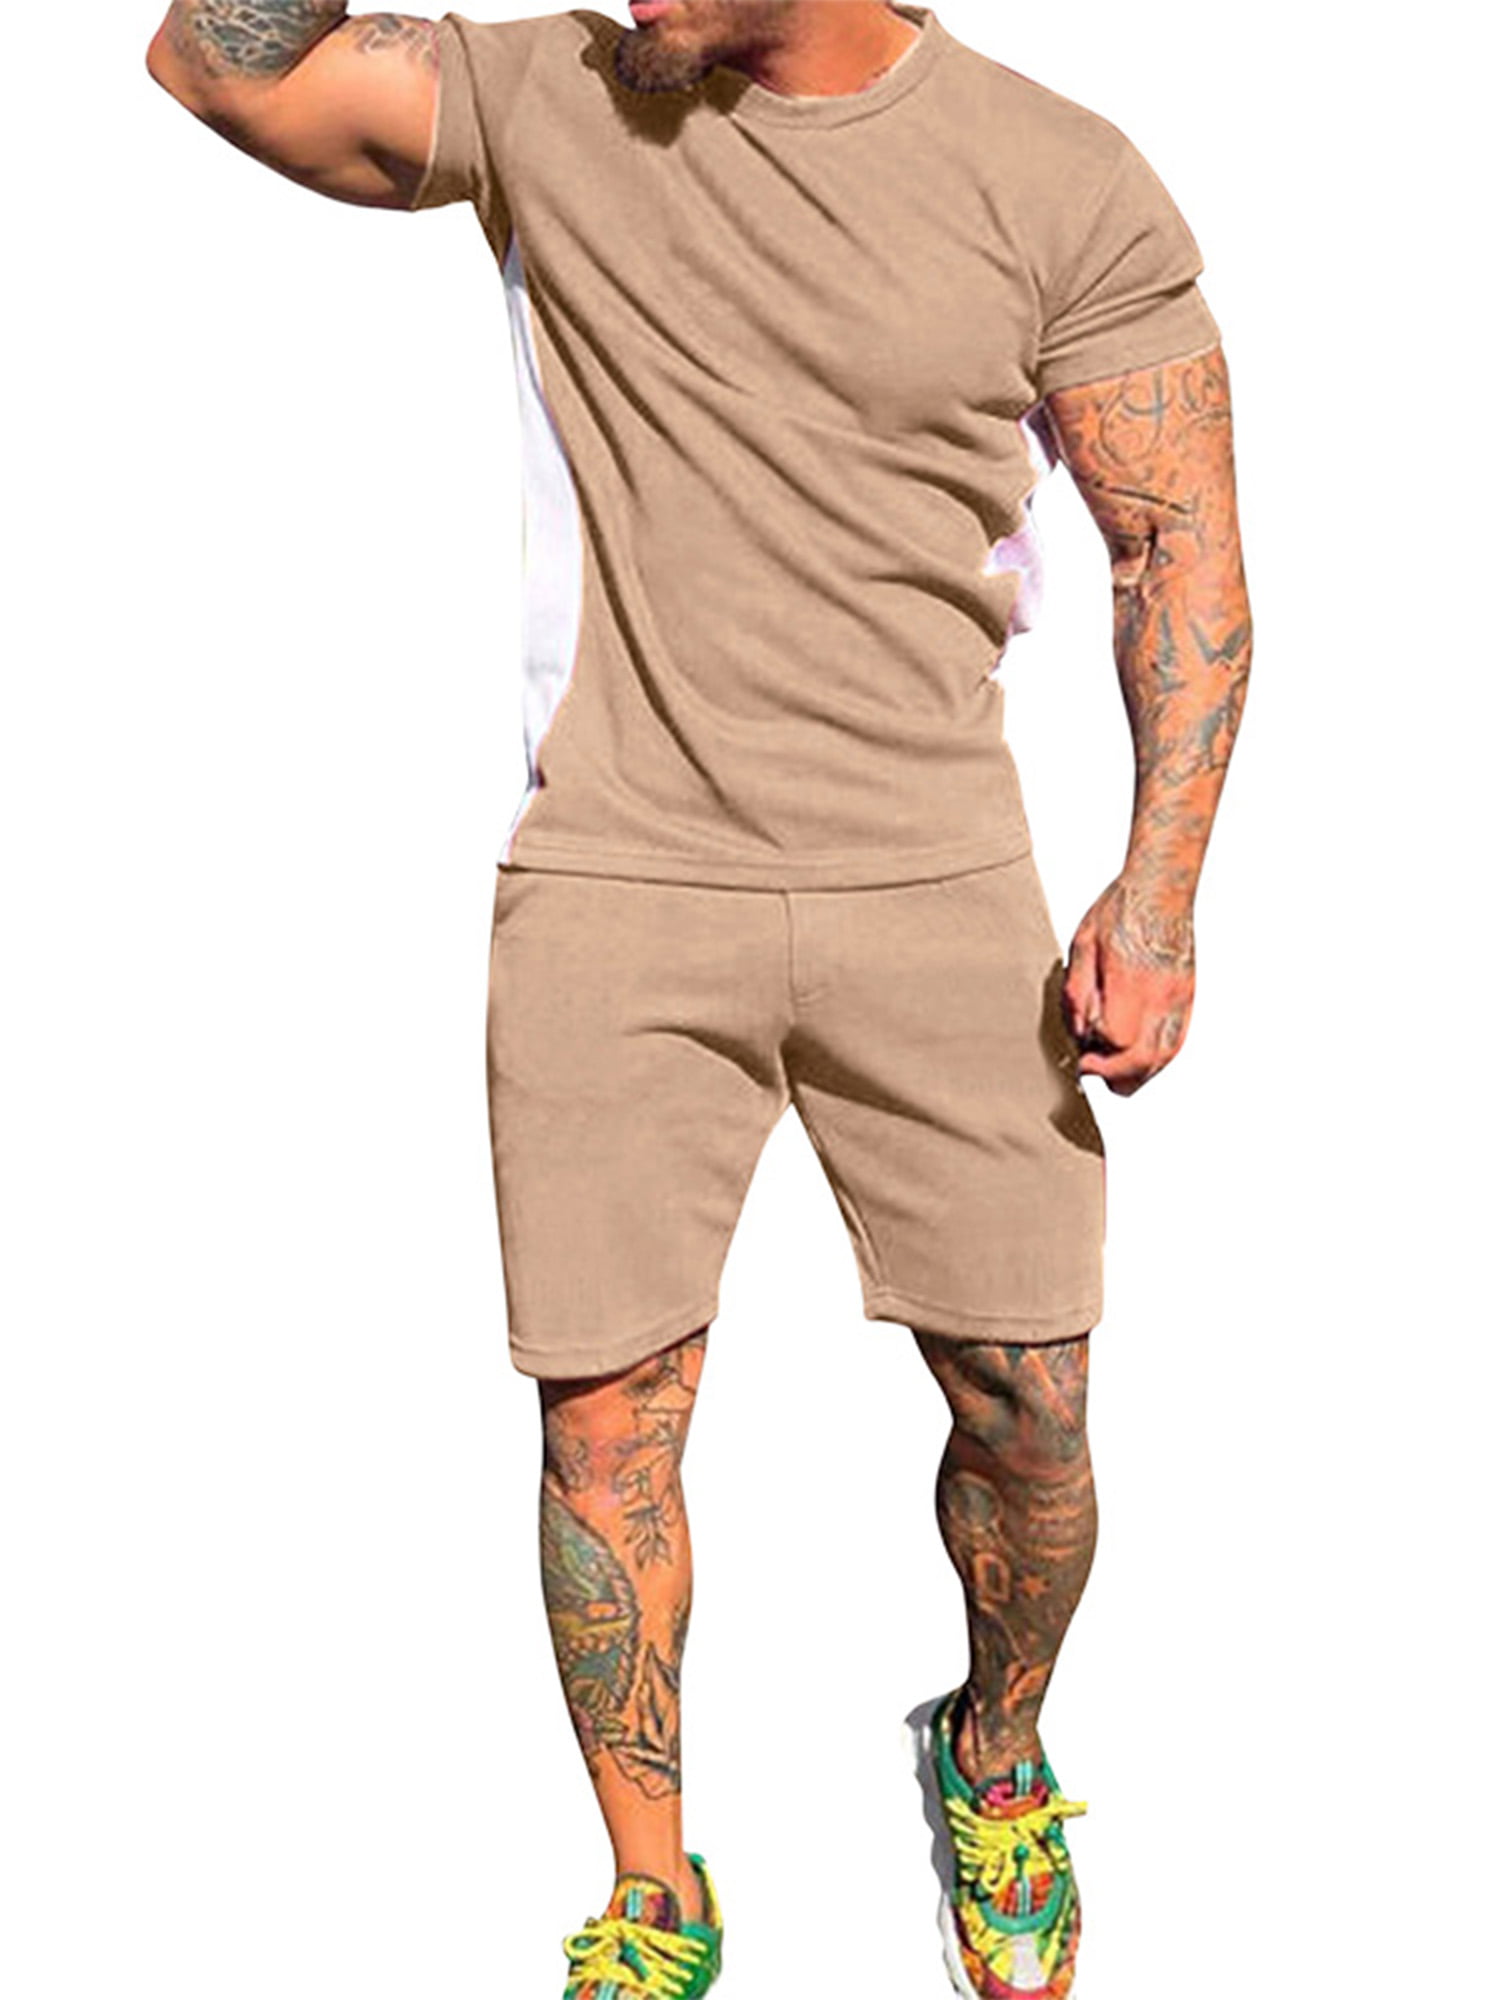 Men Athletic Tracksuit Short Sleeve Shirt Shorts Set 2 Piece Outfits Sportswear